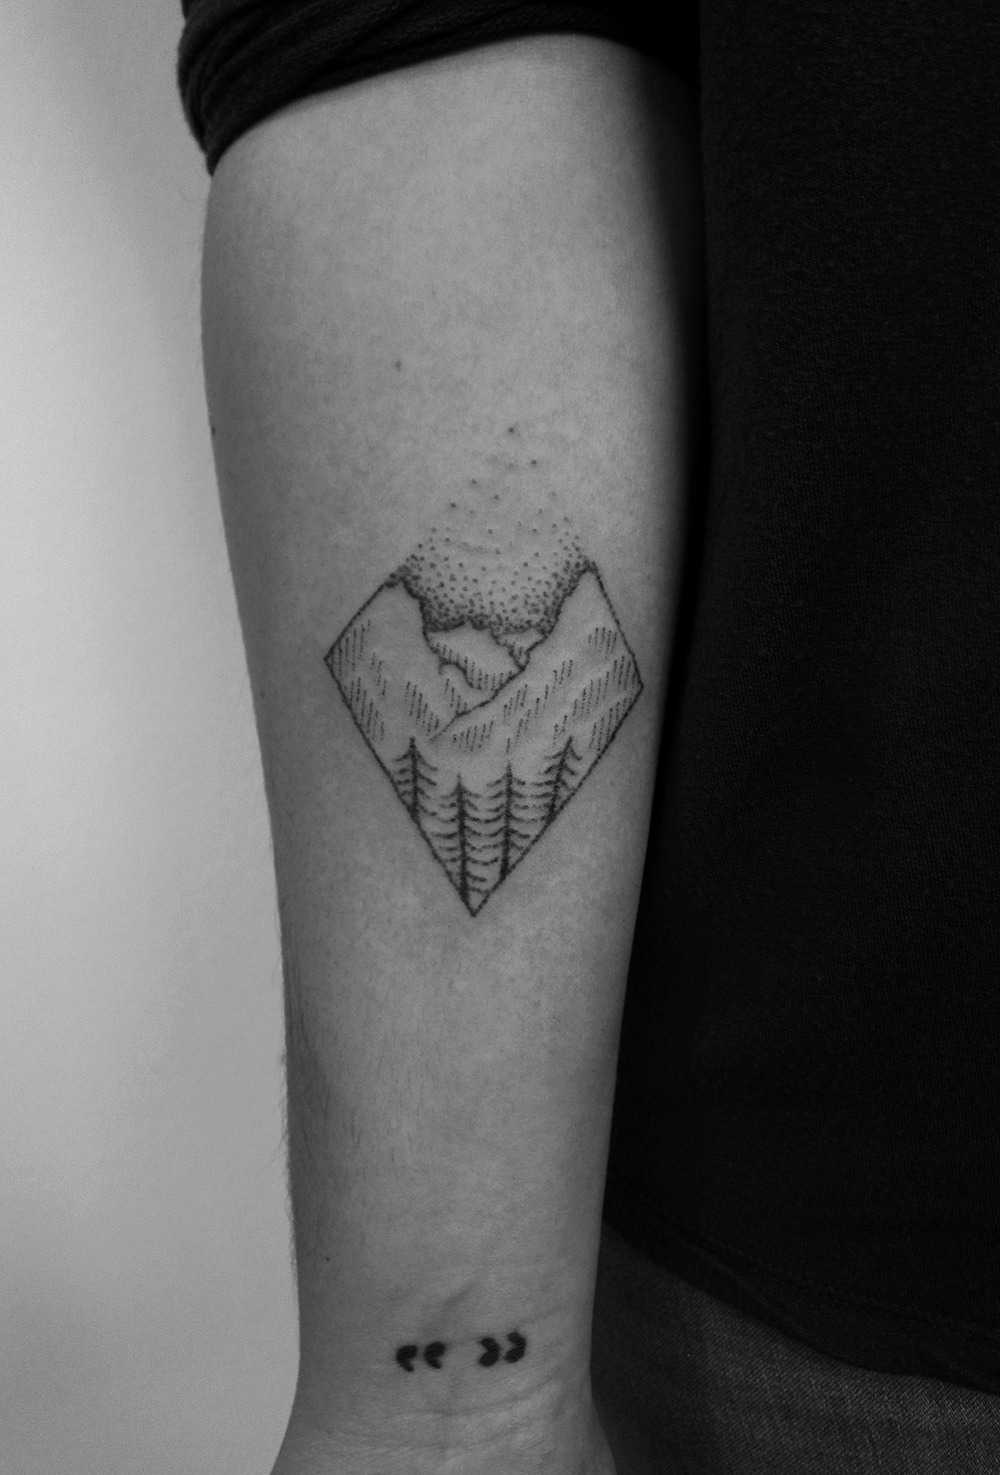 Minimalist mountain scene tattoo by Regius Ink